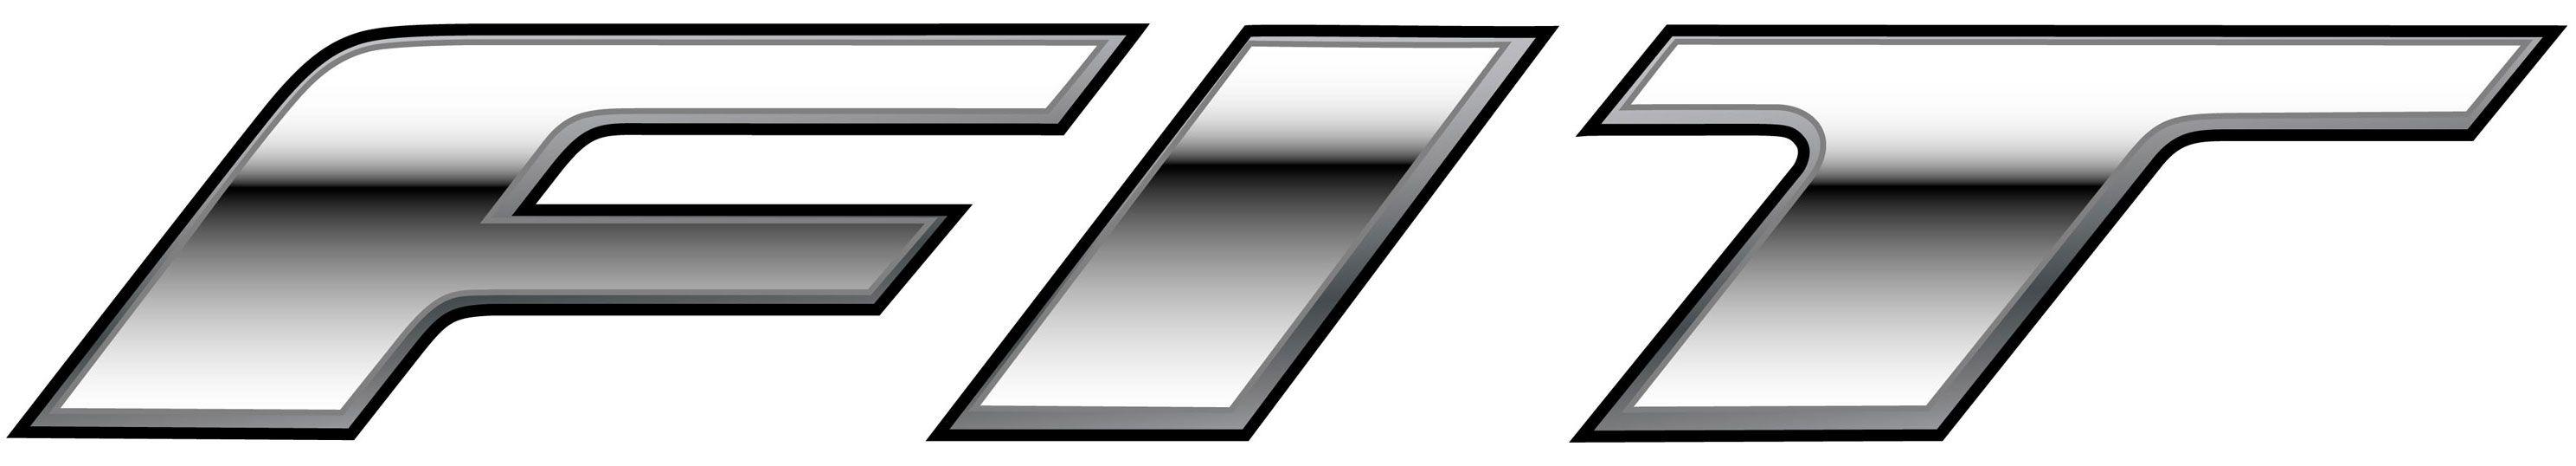 Honda Fit Logo - Honda related emblems